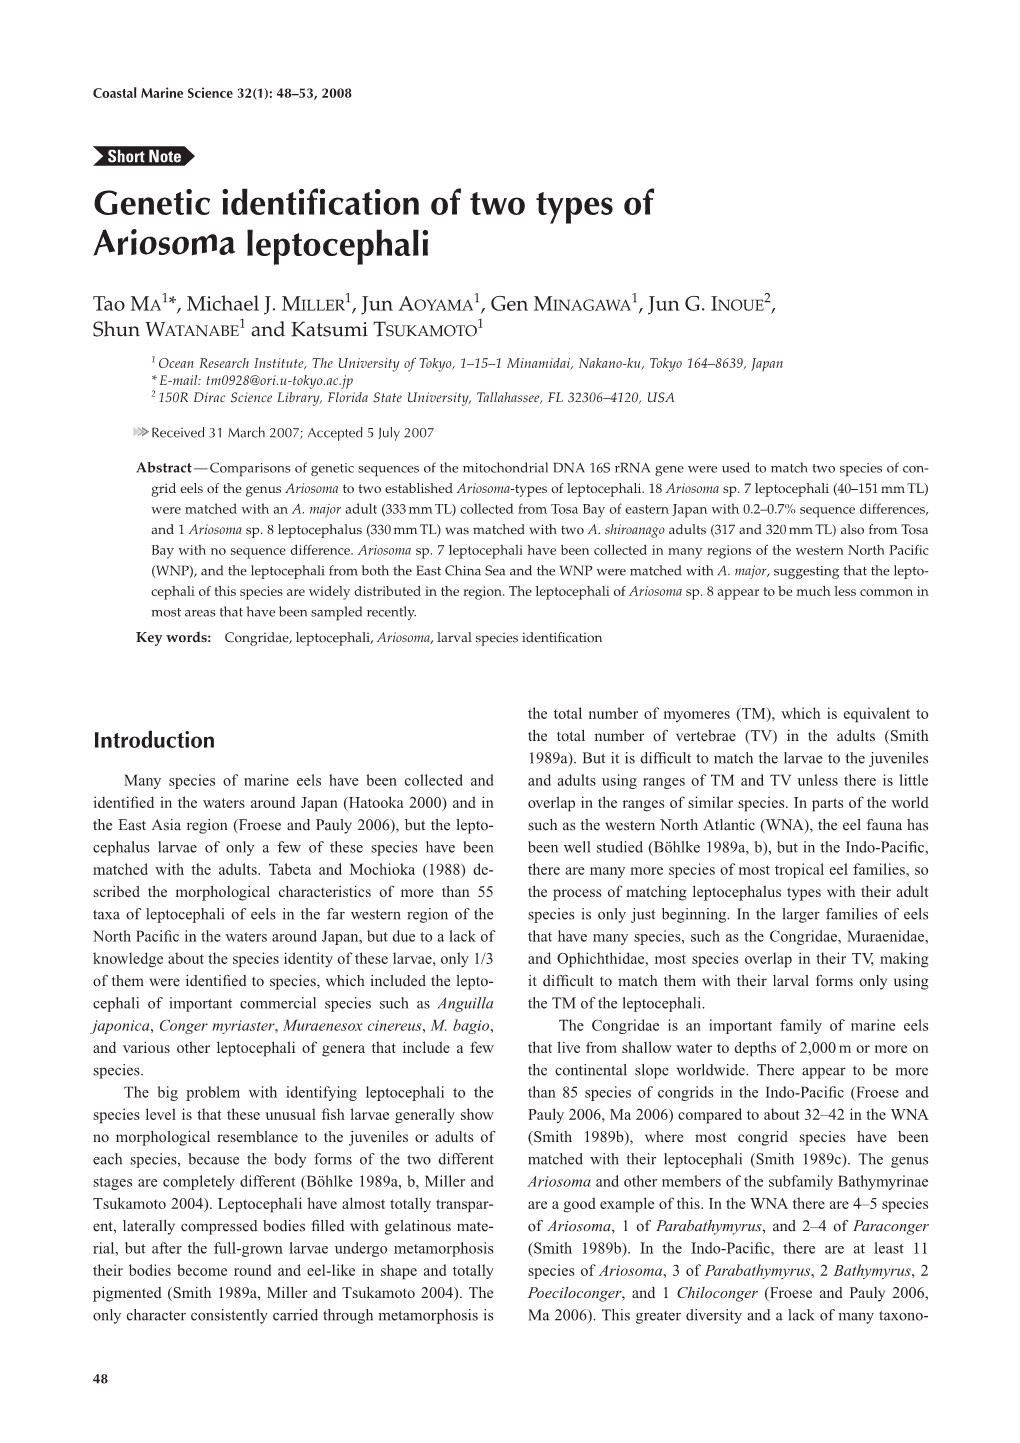 Genetic Identification of Two Types of Ariosoma Leptocephali